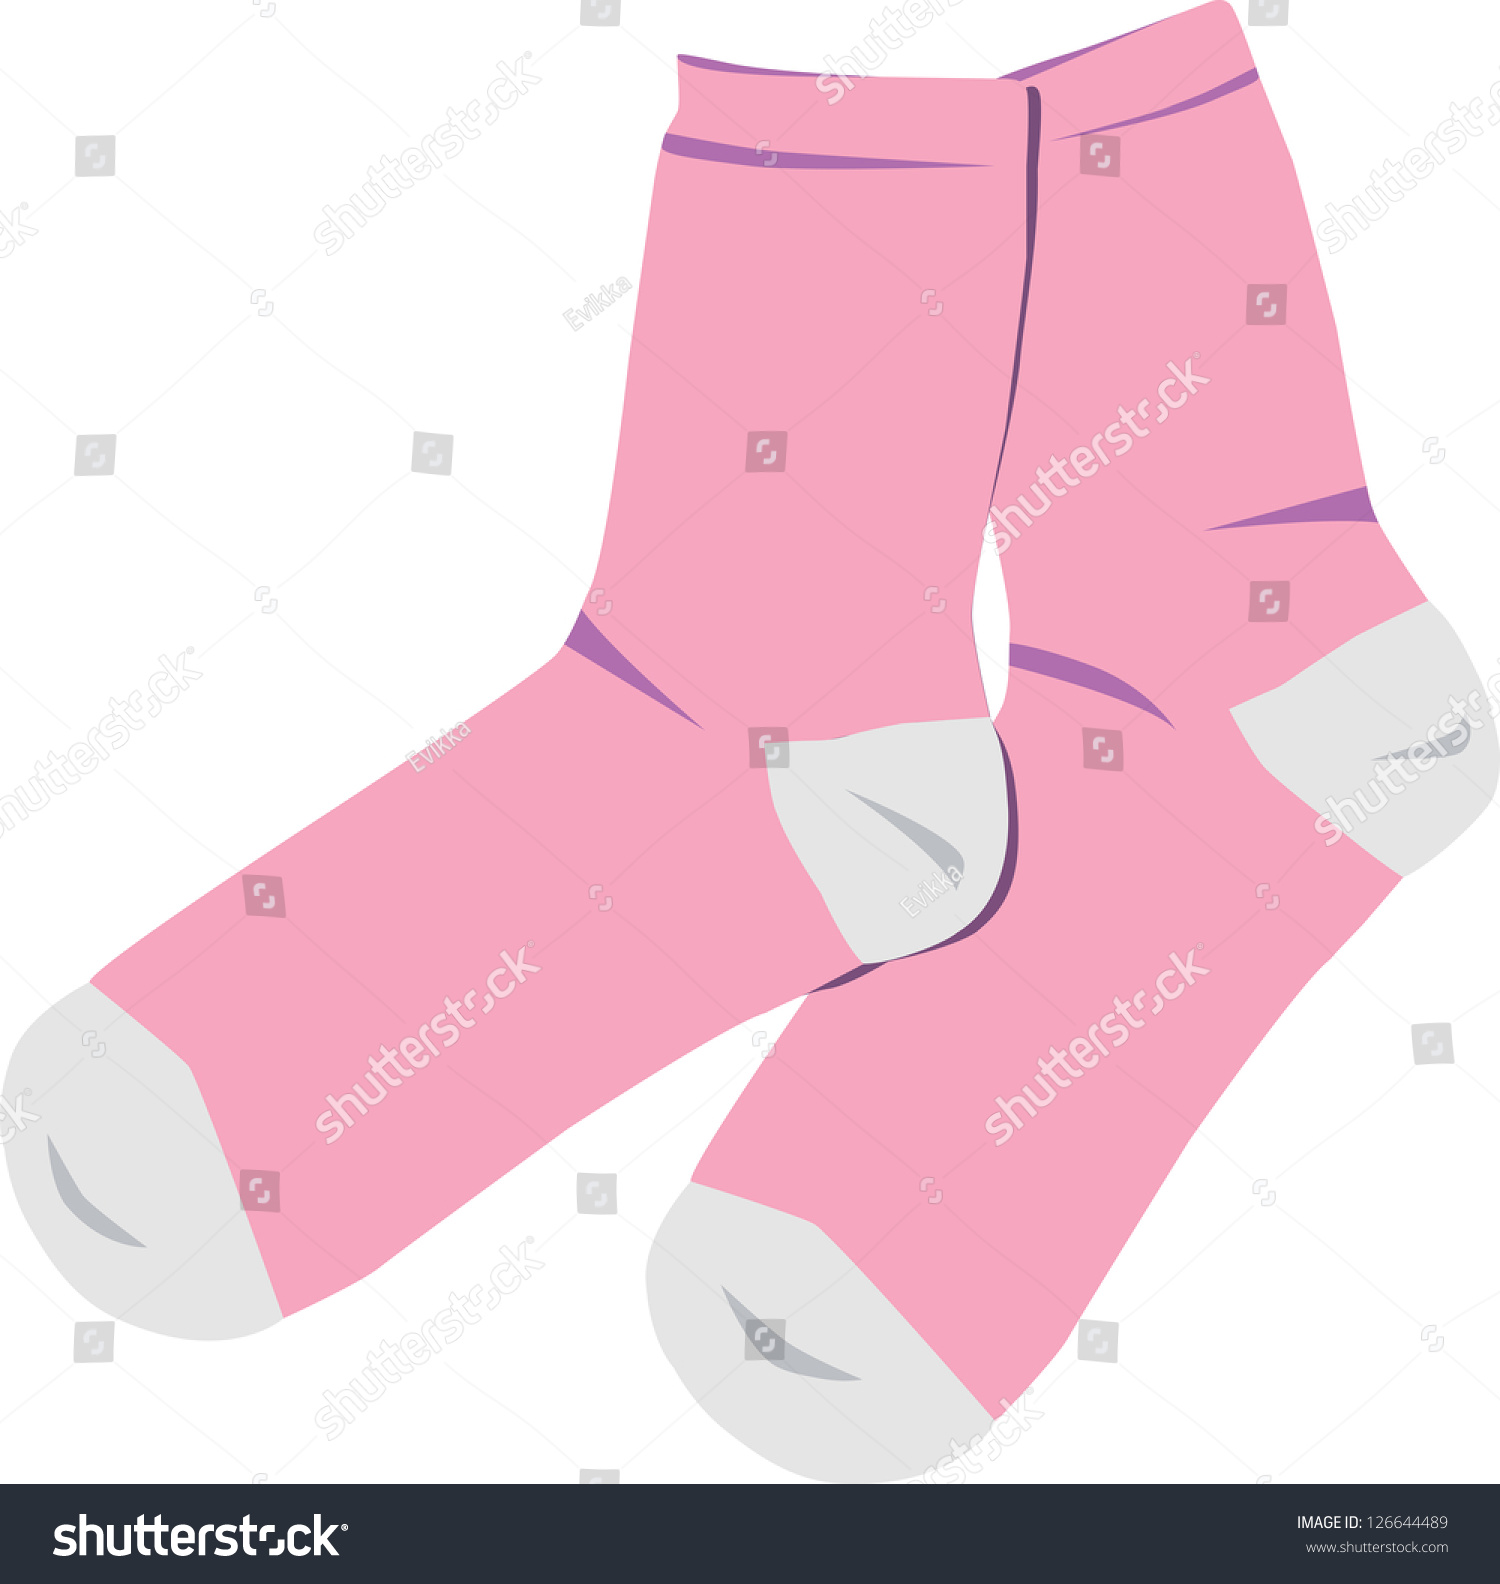 2,304 Rose socks Images, Stock Photos & Vectors | Shutterstock